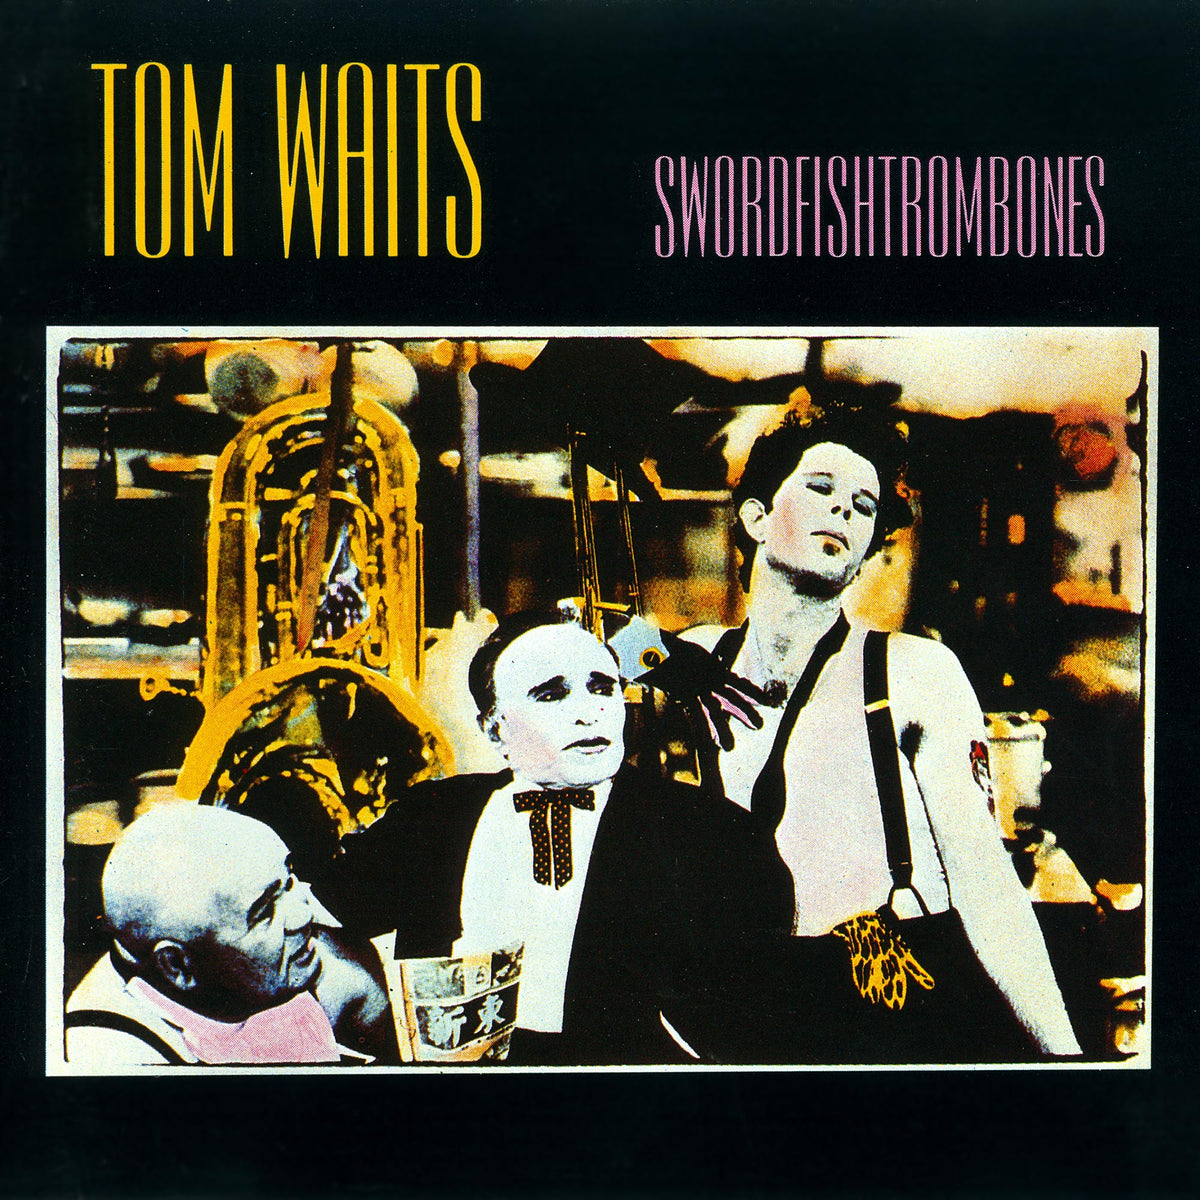 Tom Waits - Swordfishtrombones